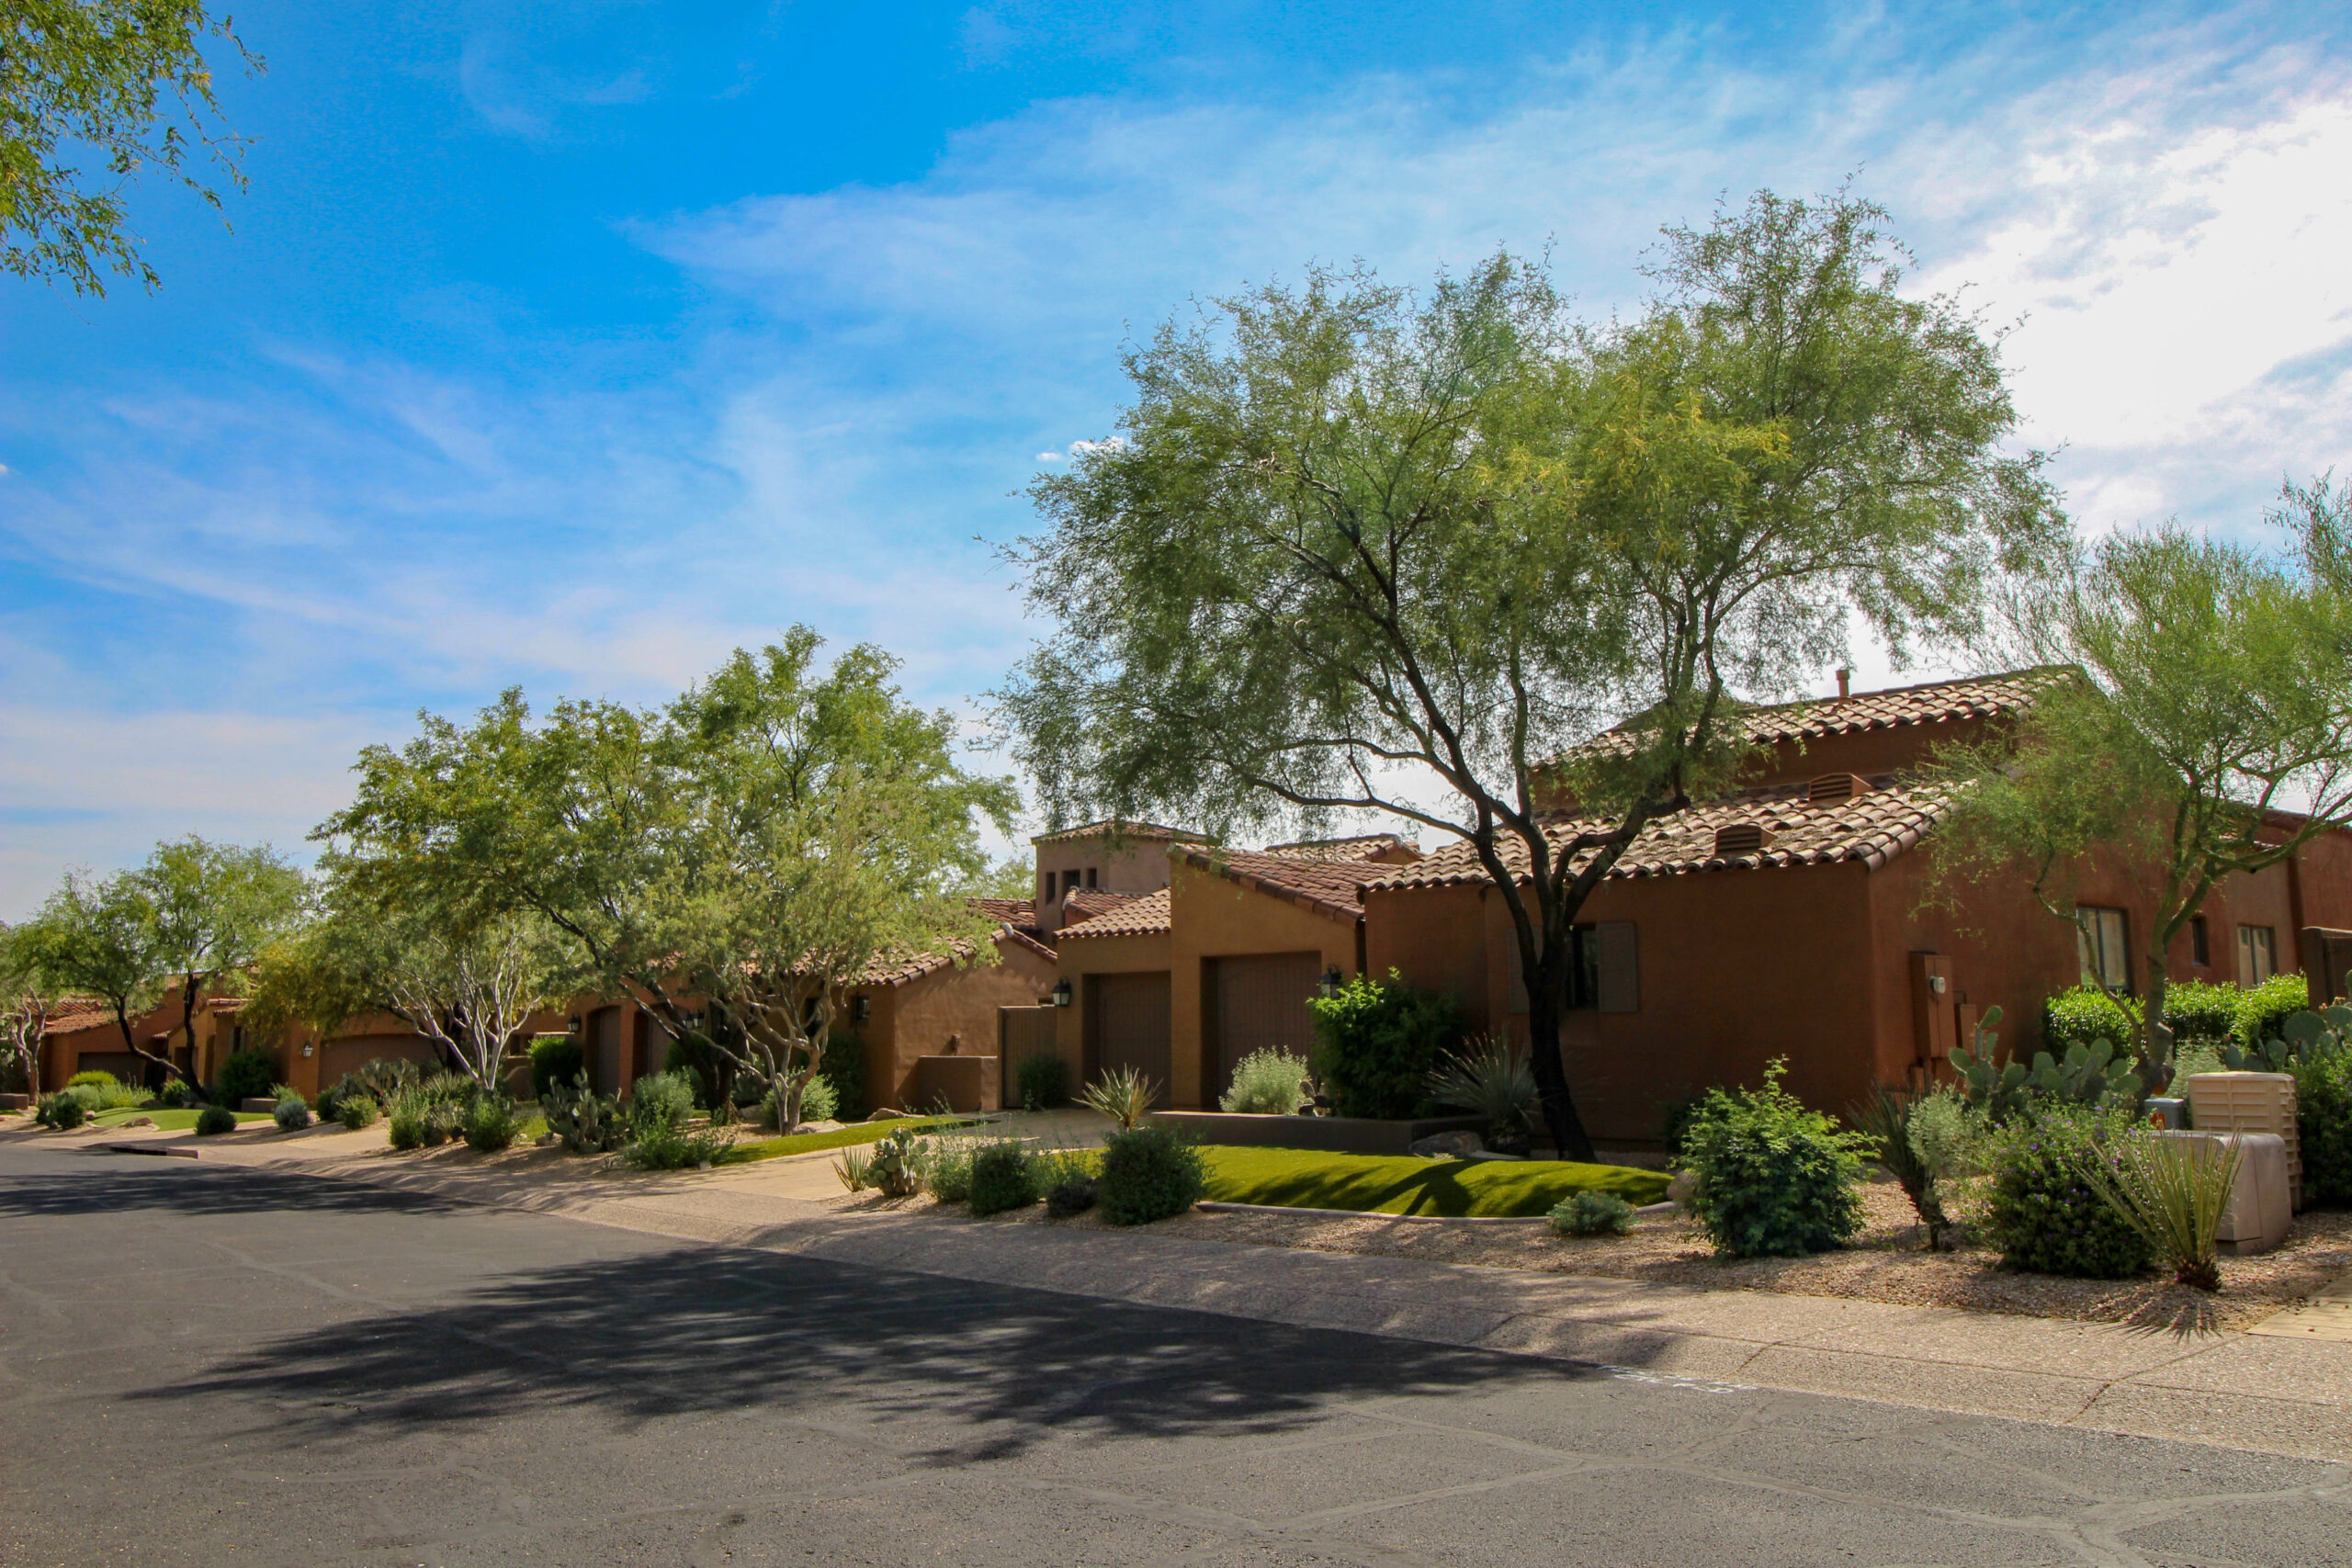 Southwest style homes in Phoenix Arizona